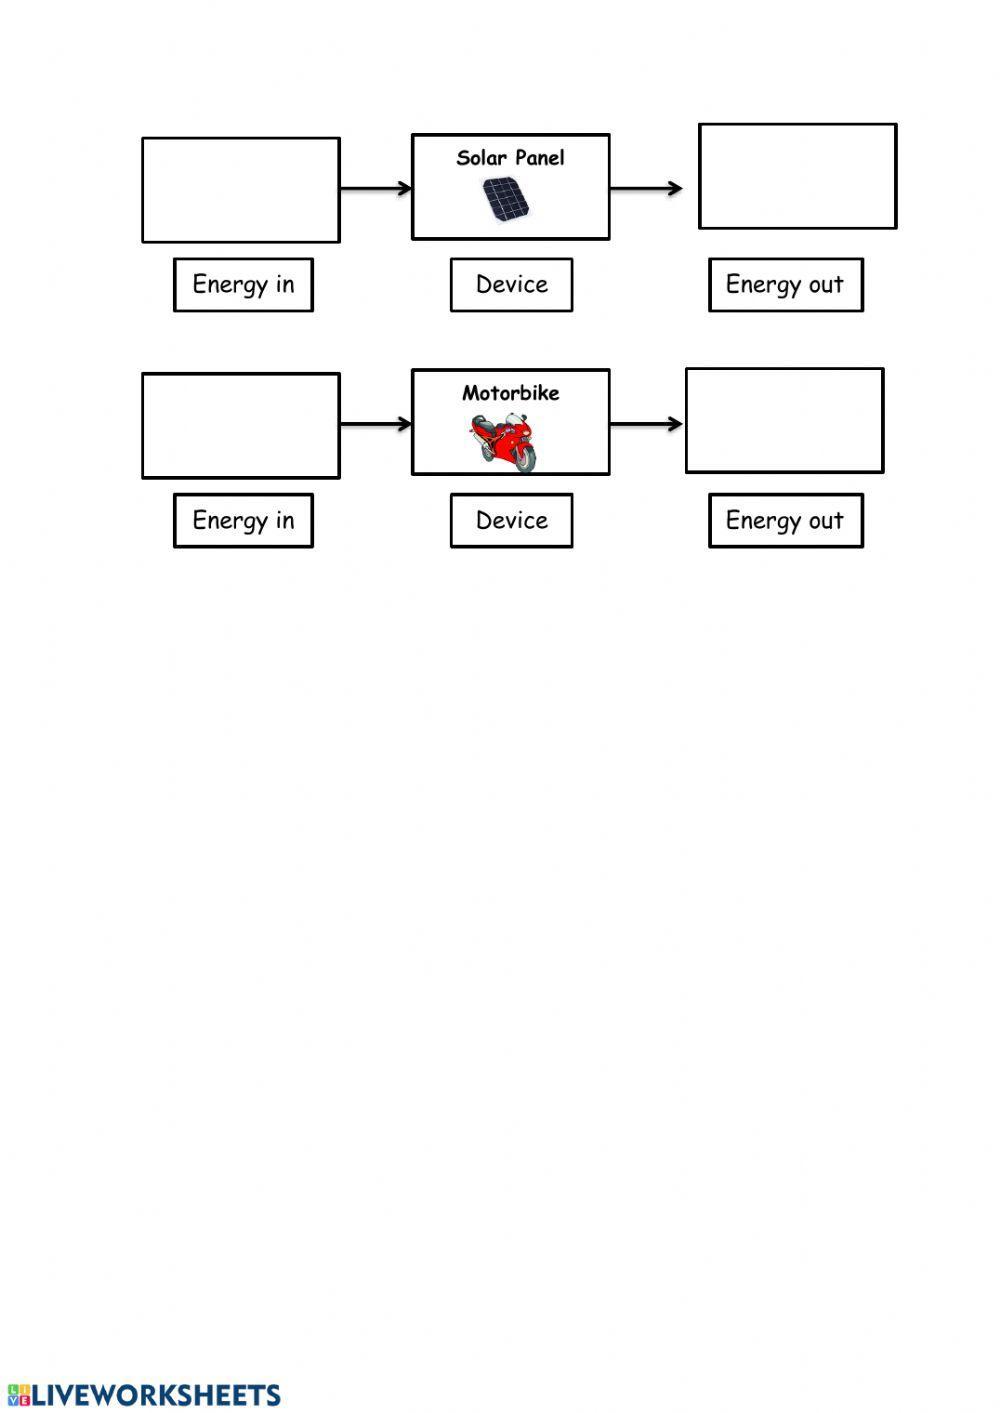 Energy transformation